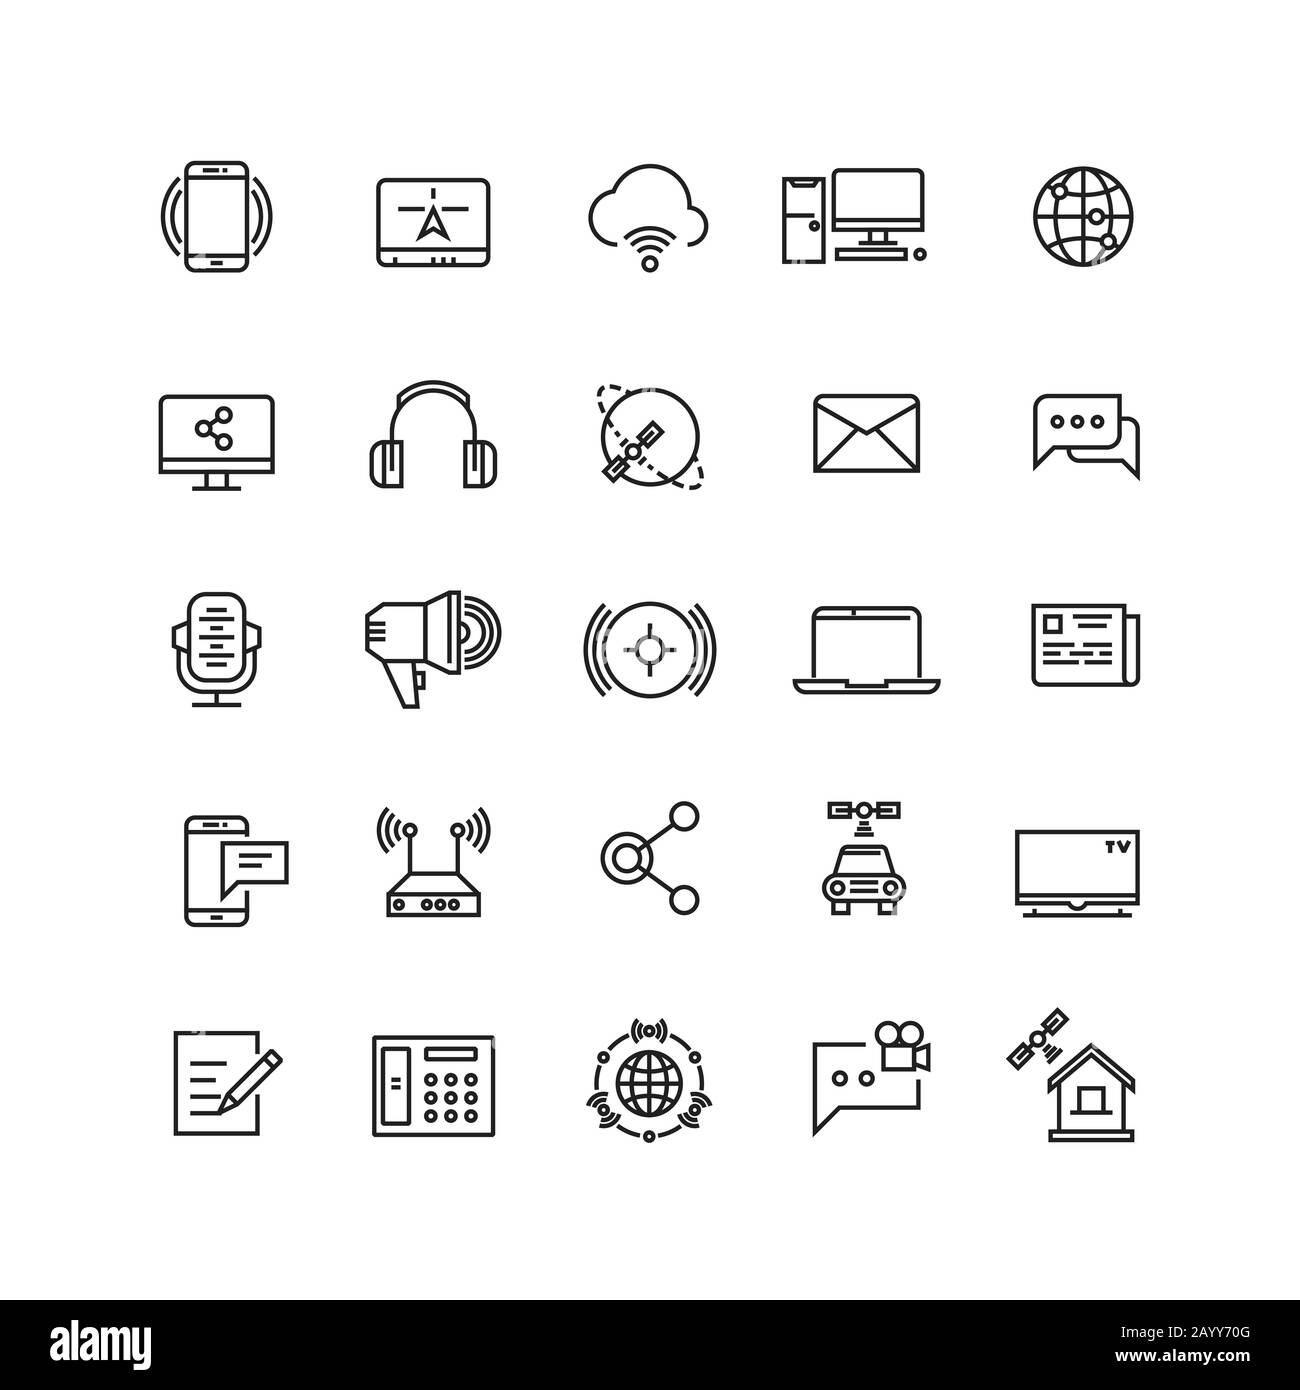 Media and communication line vector icons. Communication media web internet, mobile technology for communication illustration Stock Vector